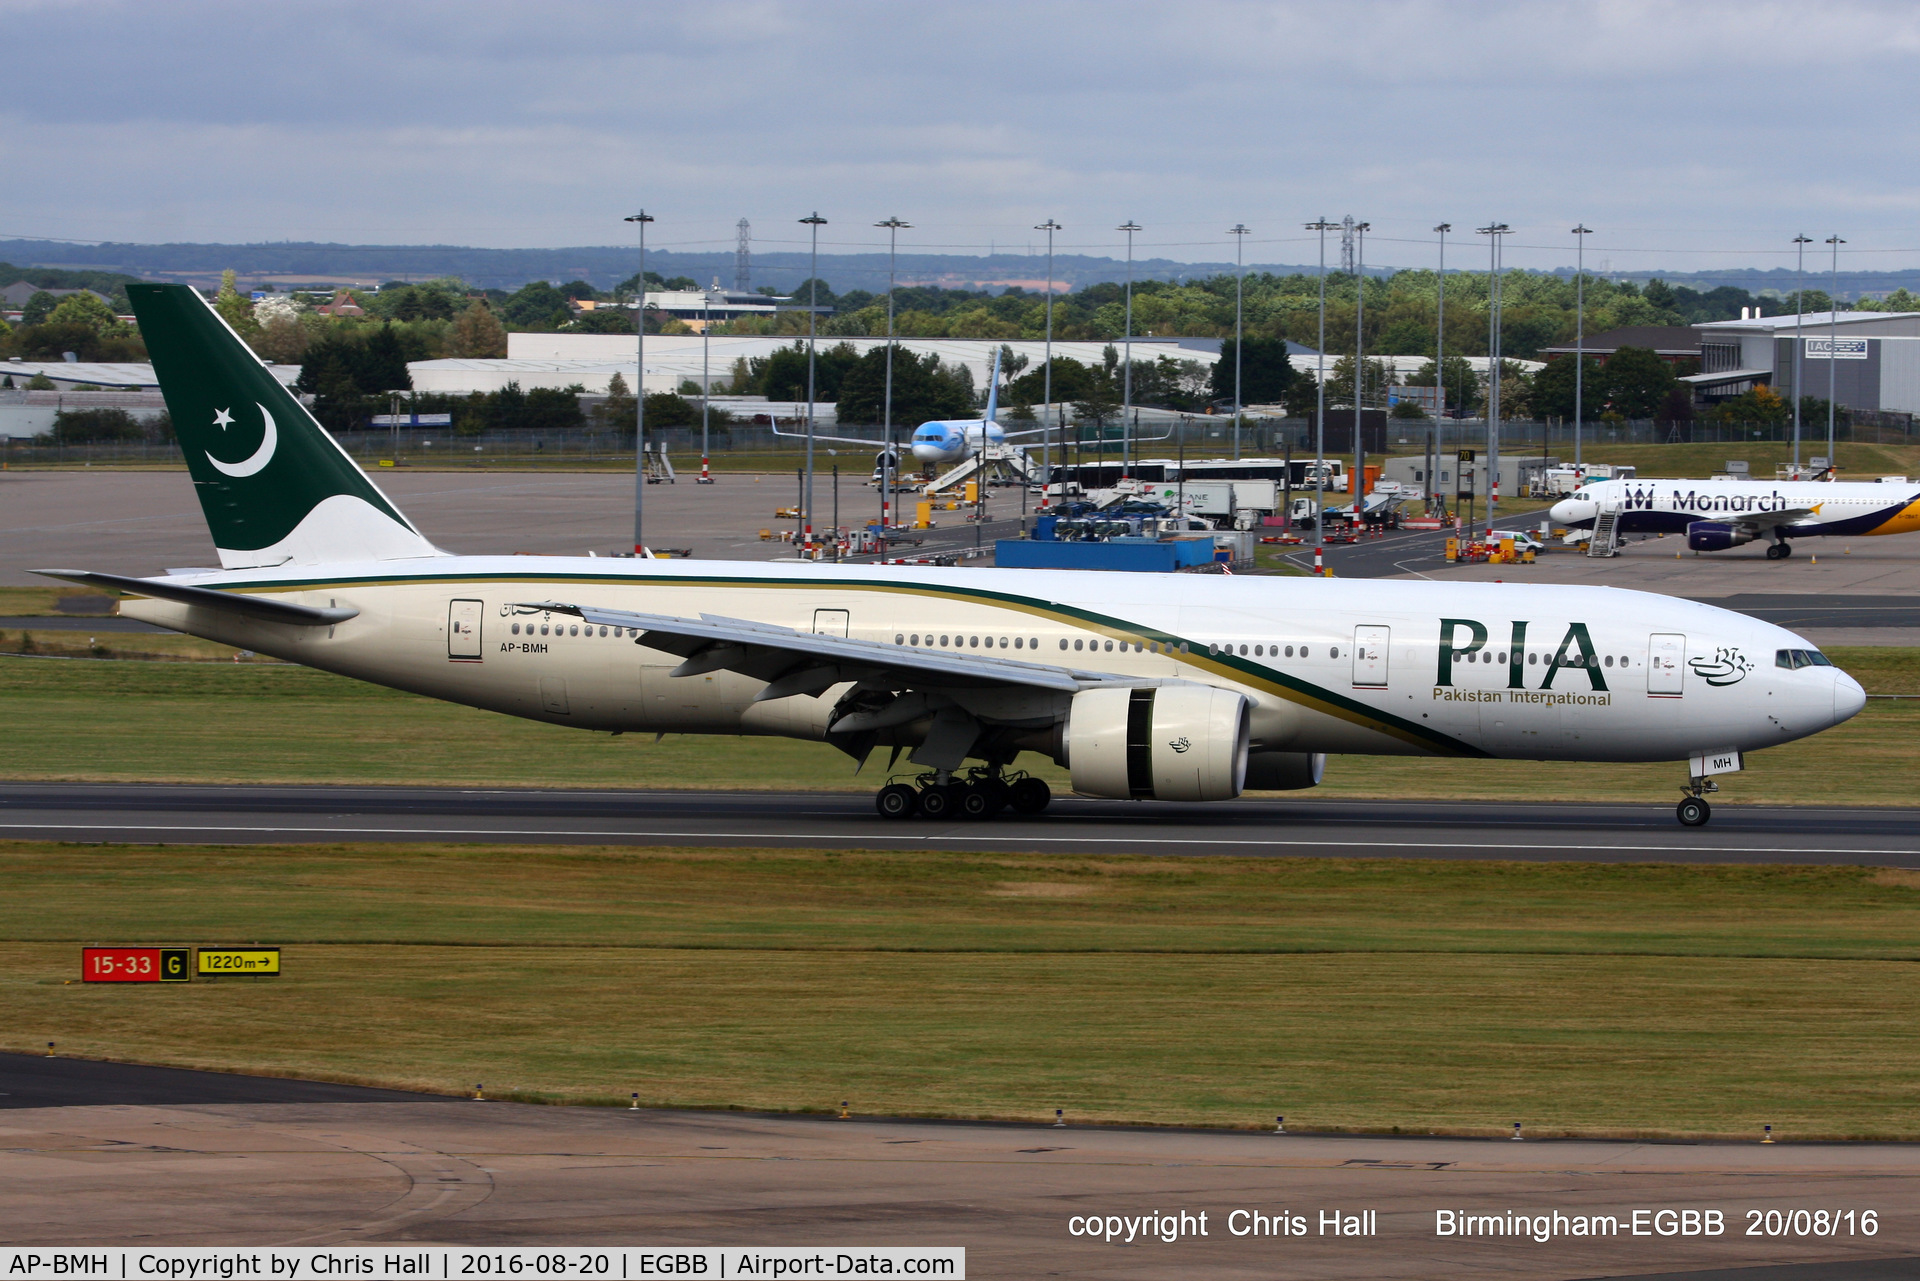 AP-BMH, 2005 Boeing 777-2Q8/ER C/N 32717, PIA Pakistan International Airlines